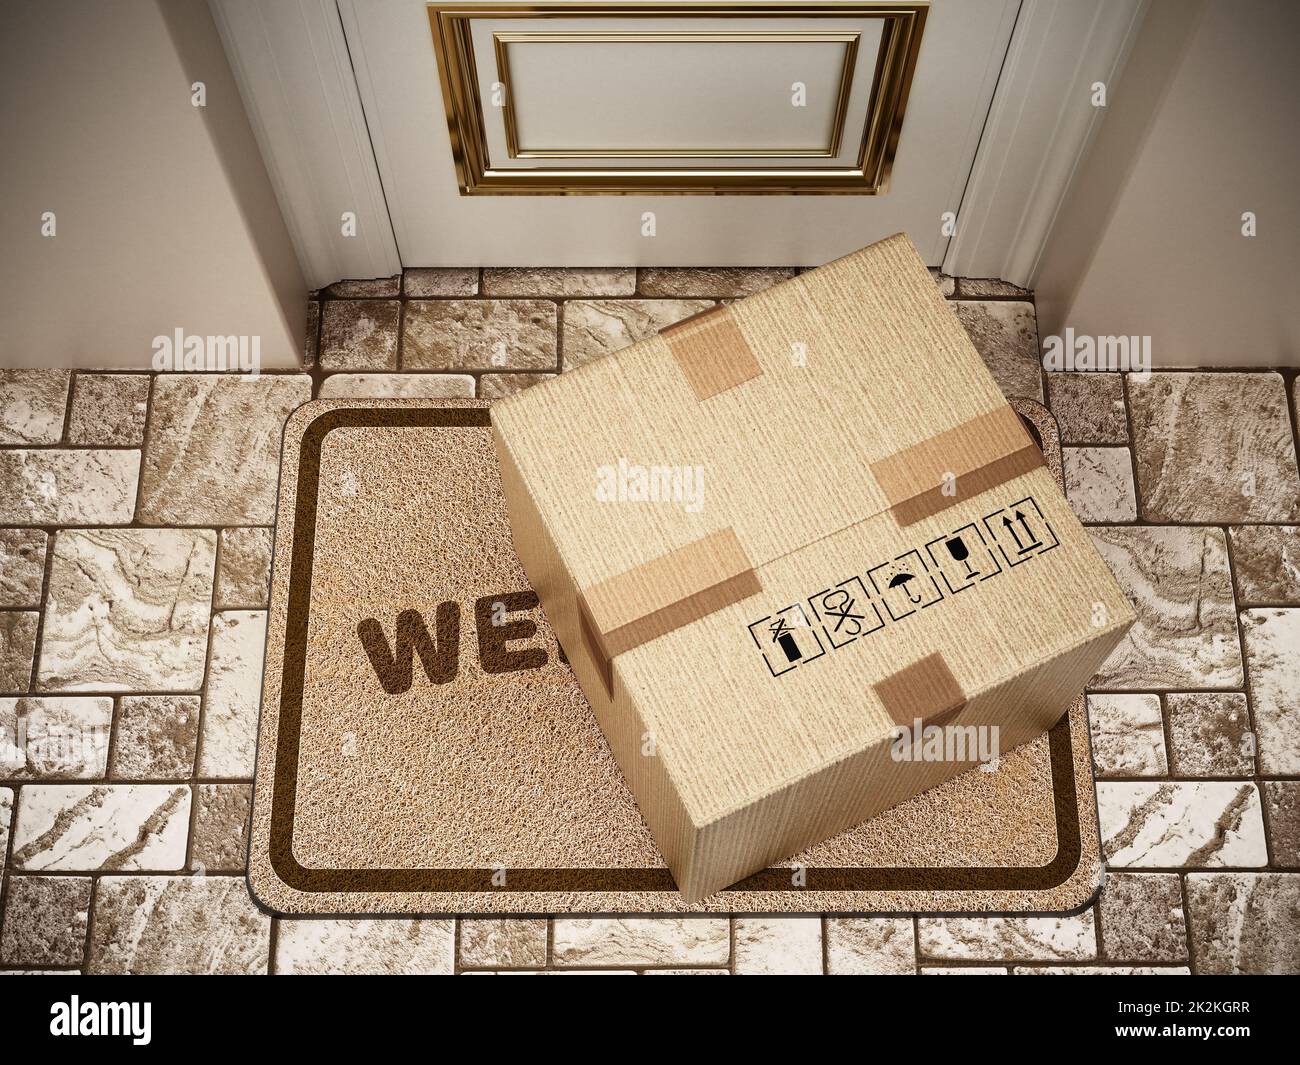 Cargo box standing on doormat. 3D illustration Stock Photo